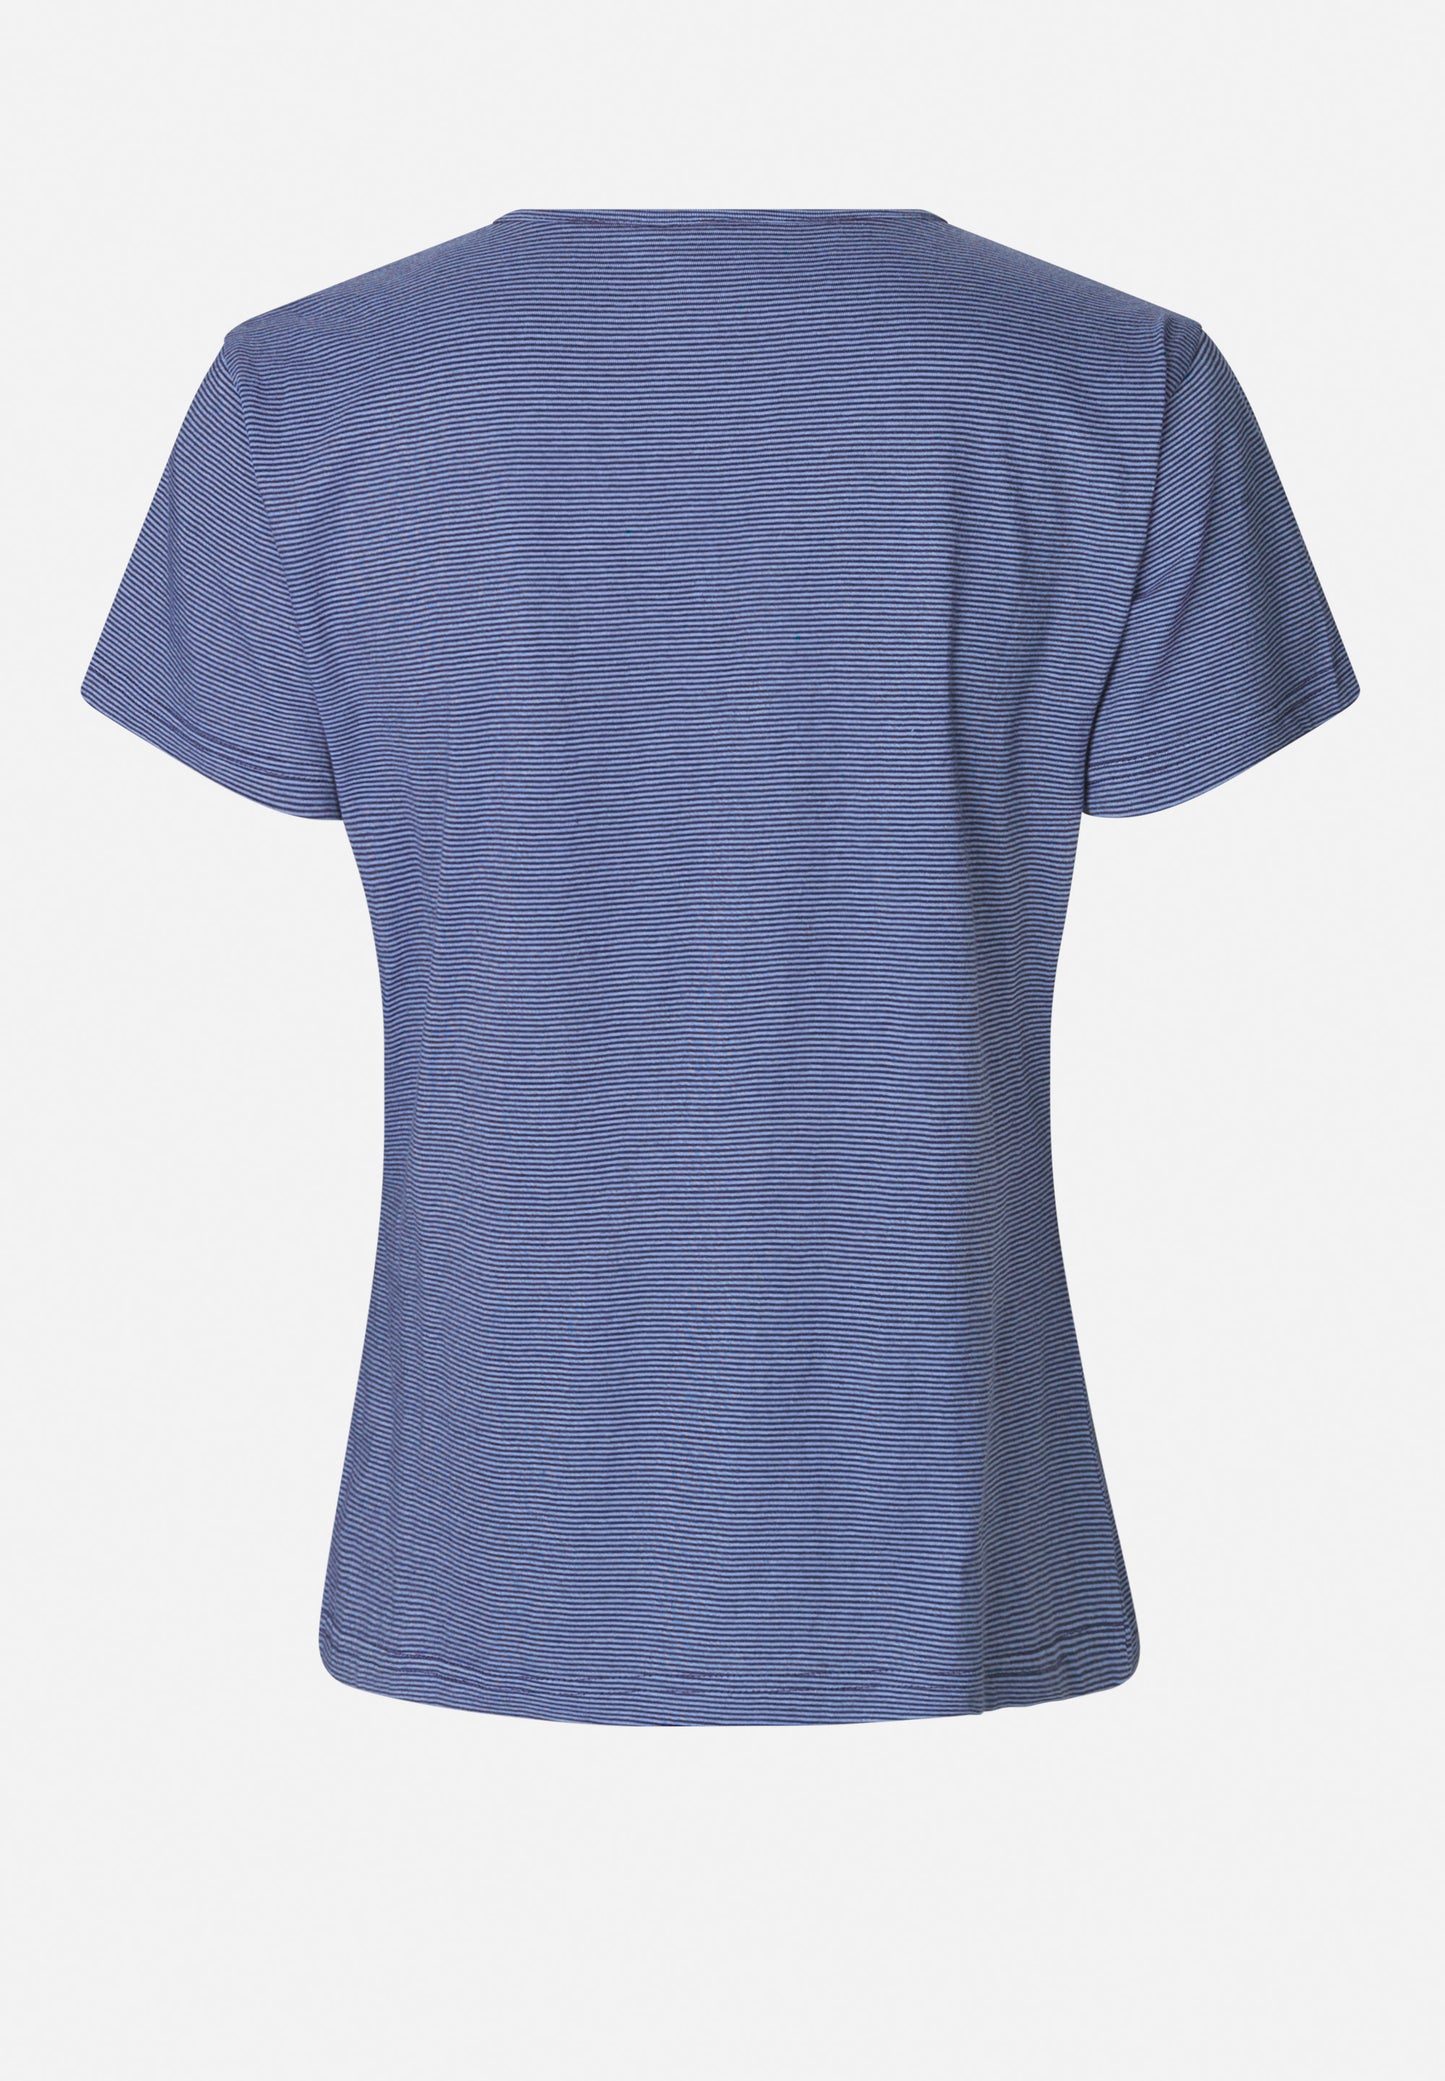 Jordan T-shirt Country Blue